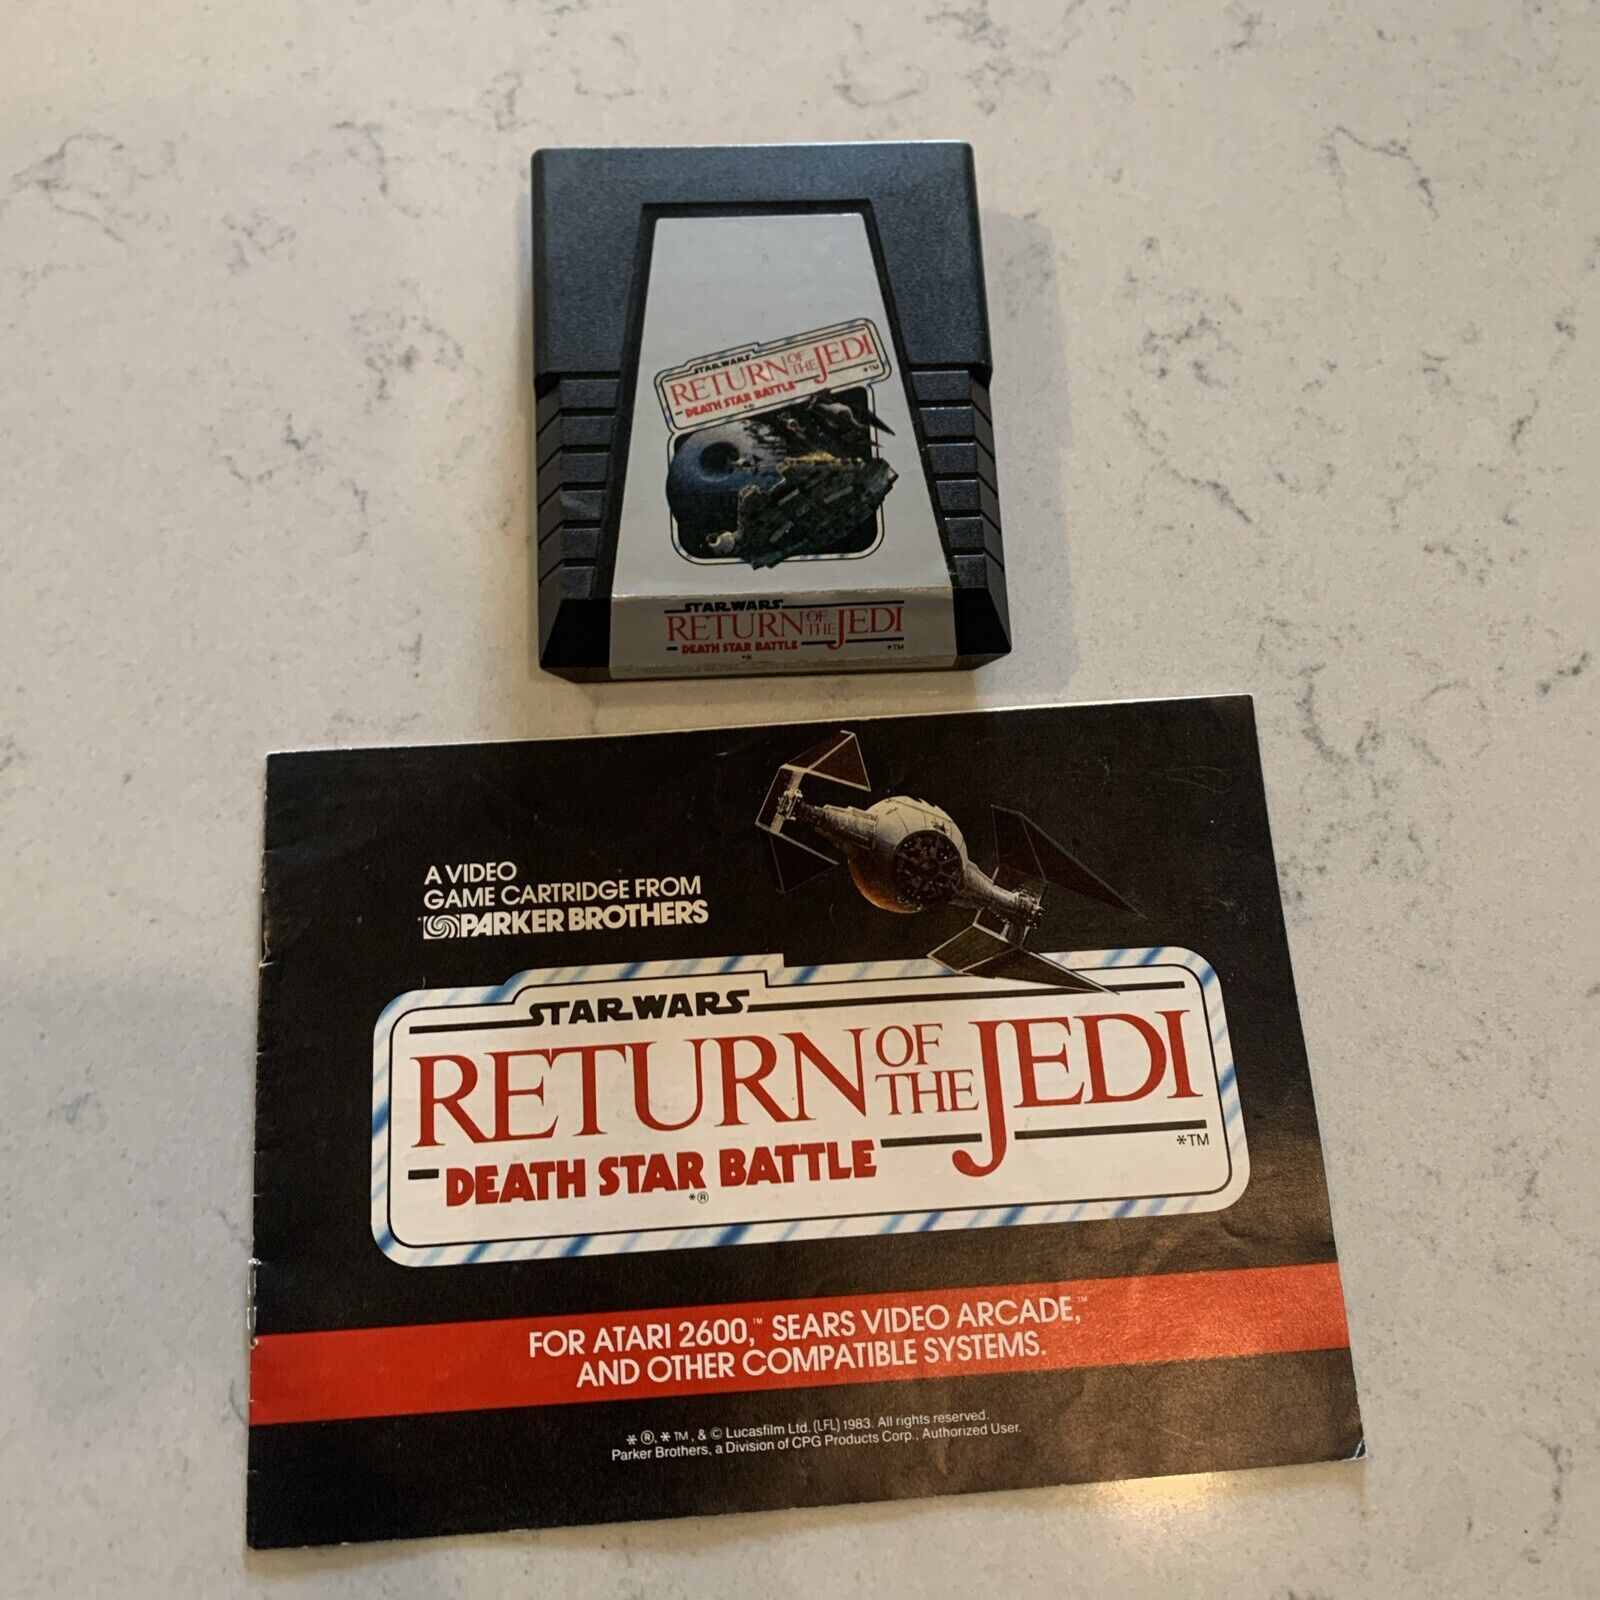 Star Wars Return of the Jedi: Death Star Battle - Atari 2600, With manual